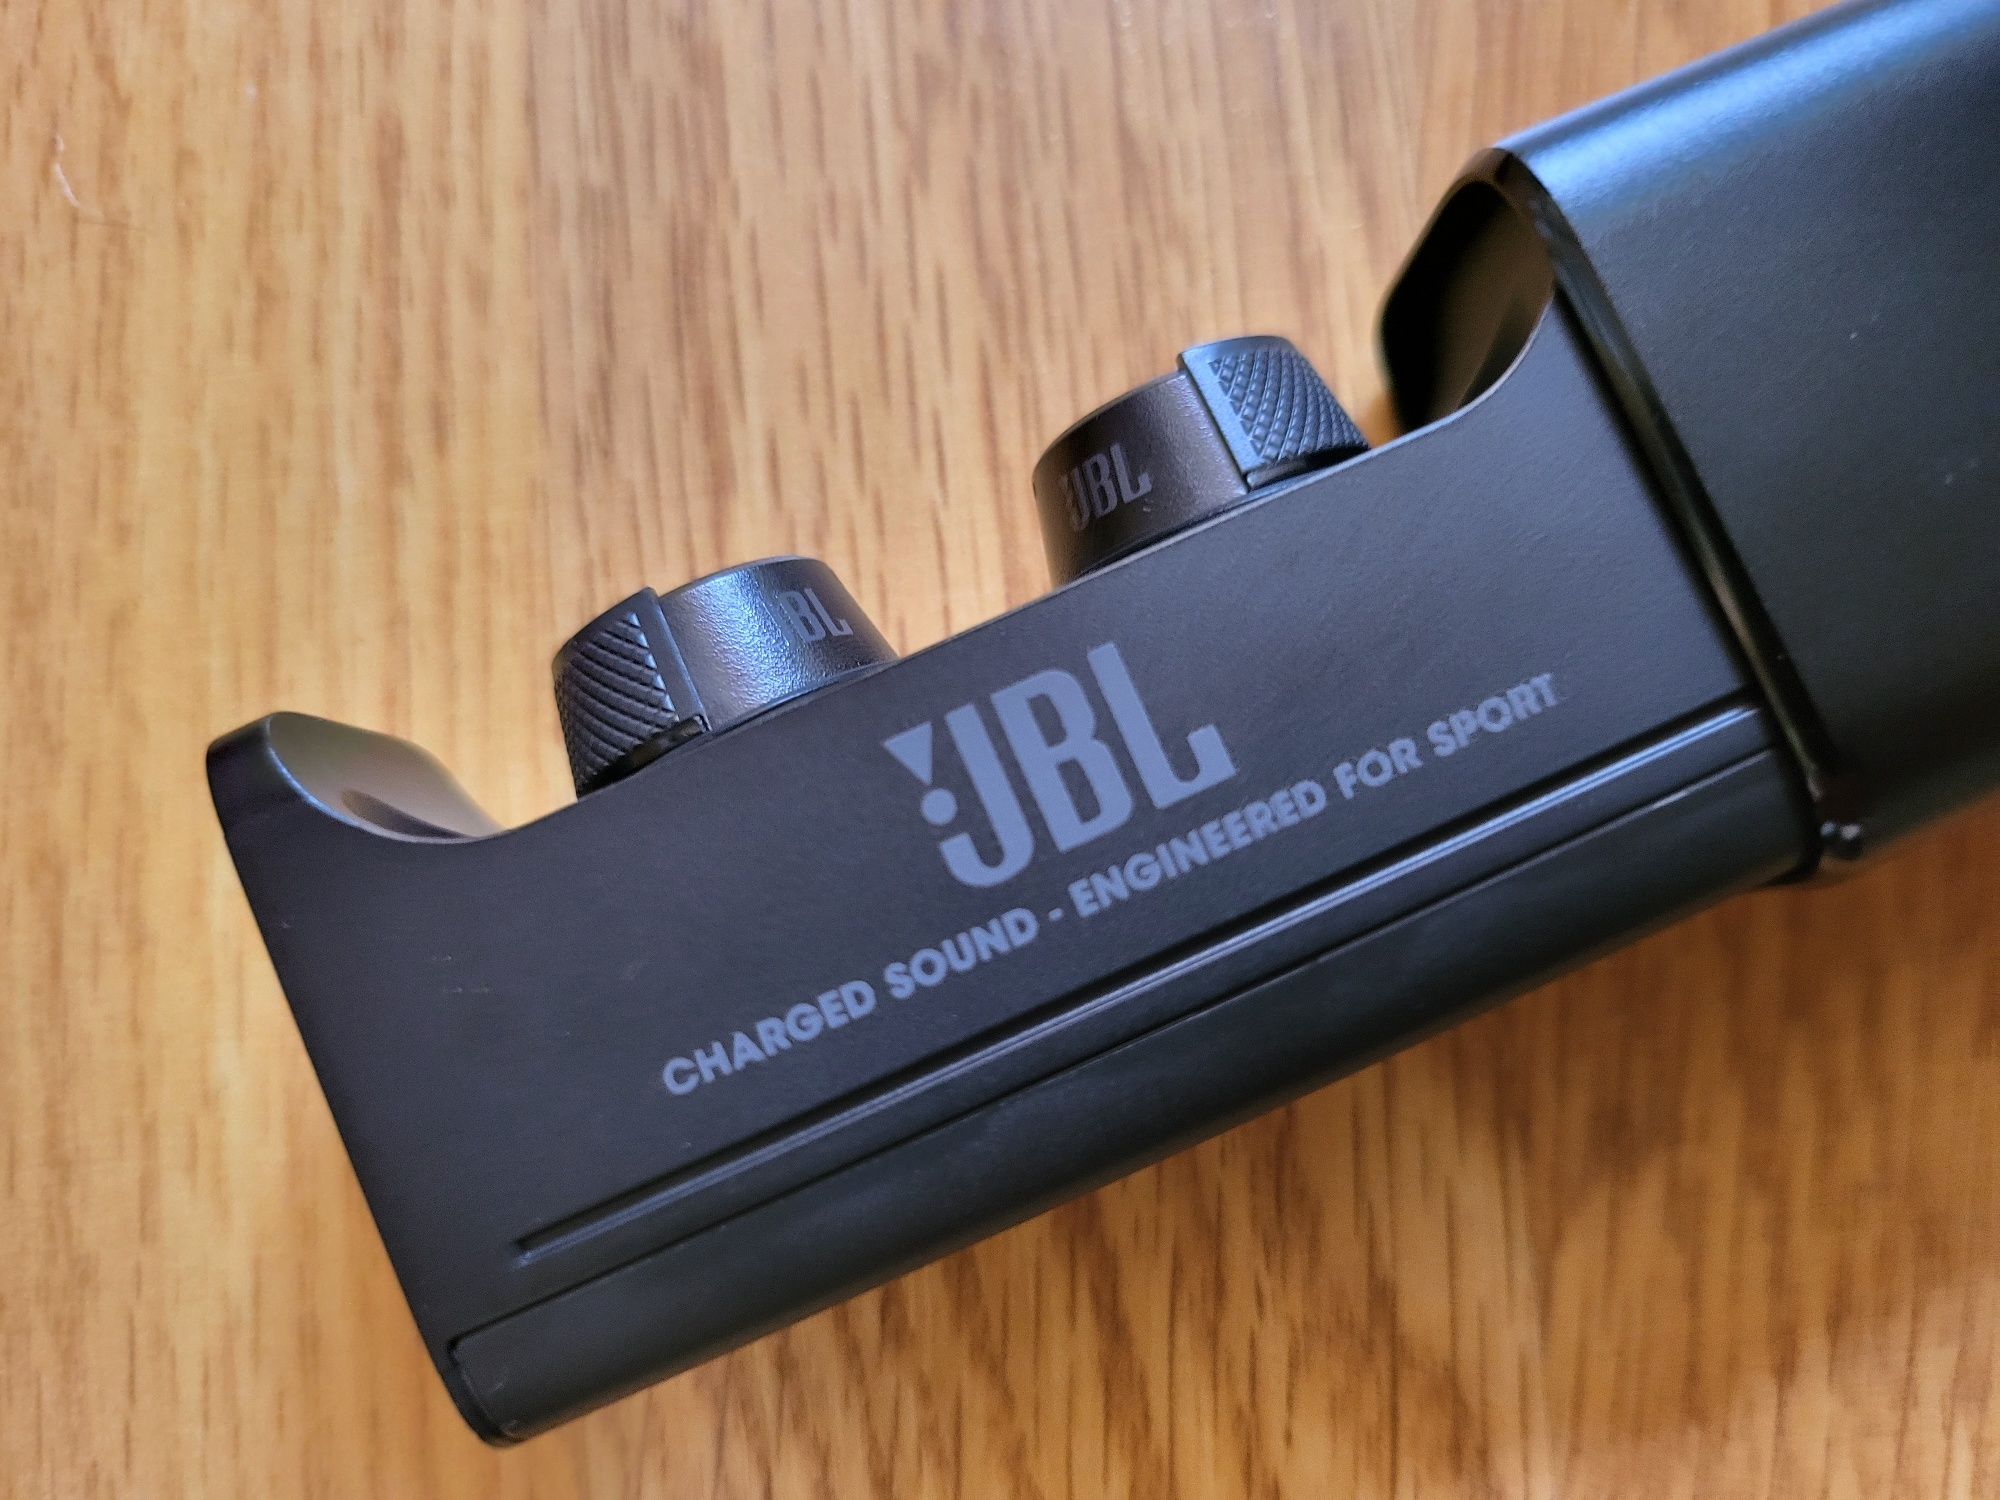 Casti wifi in ear JBL Under Armour Flash 25h battery, Storm Proof